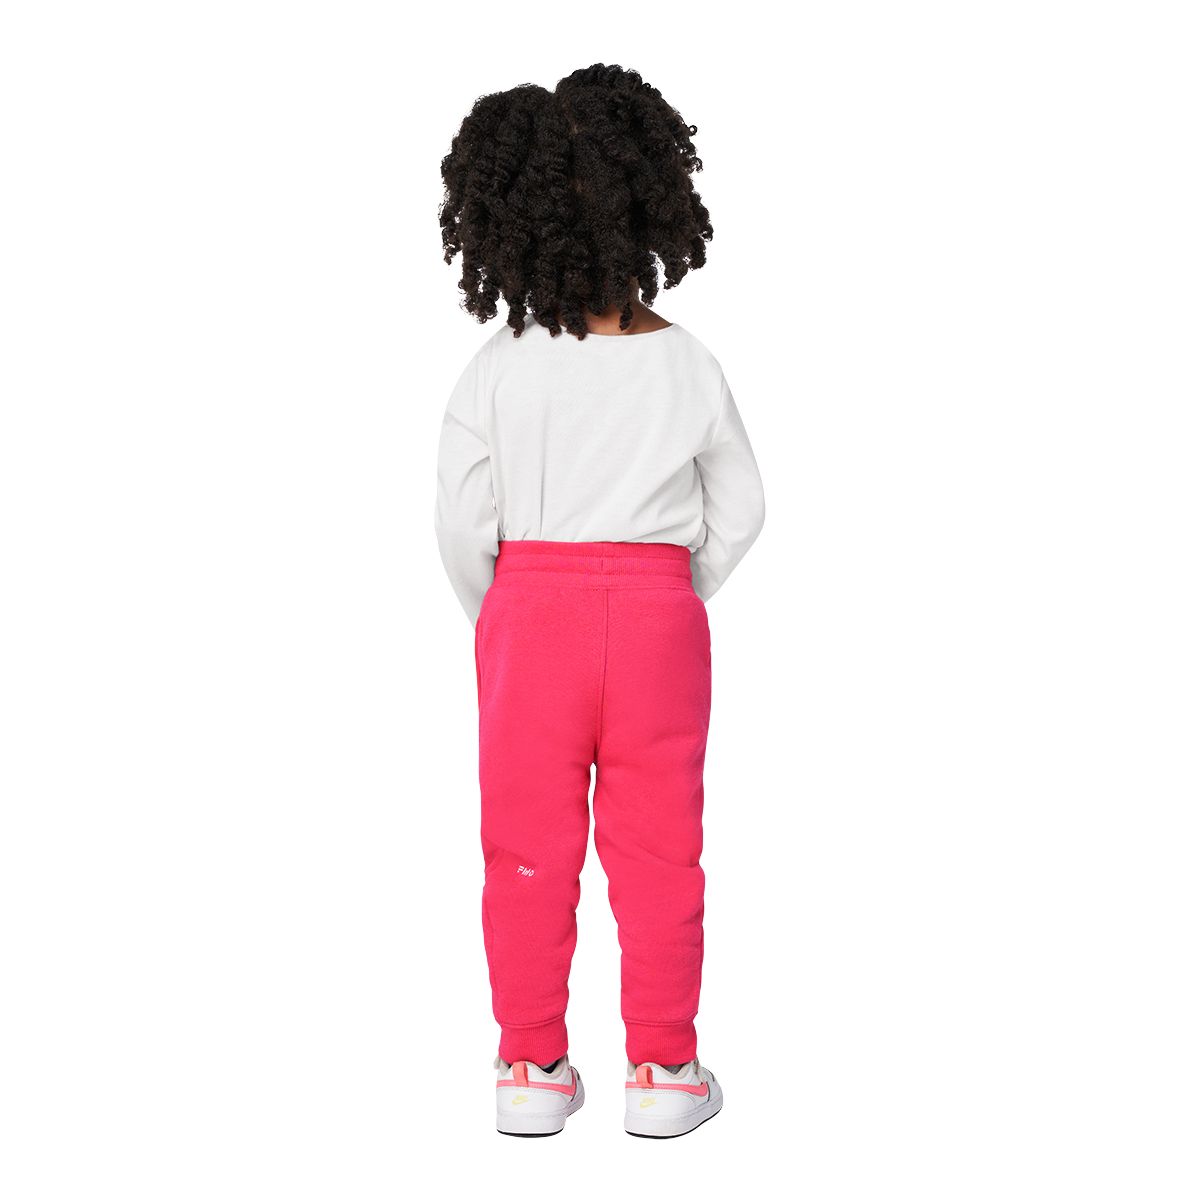 Kids Fleece Pants, Watermelon Pink, Toddler Joggers